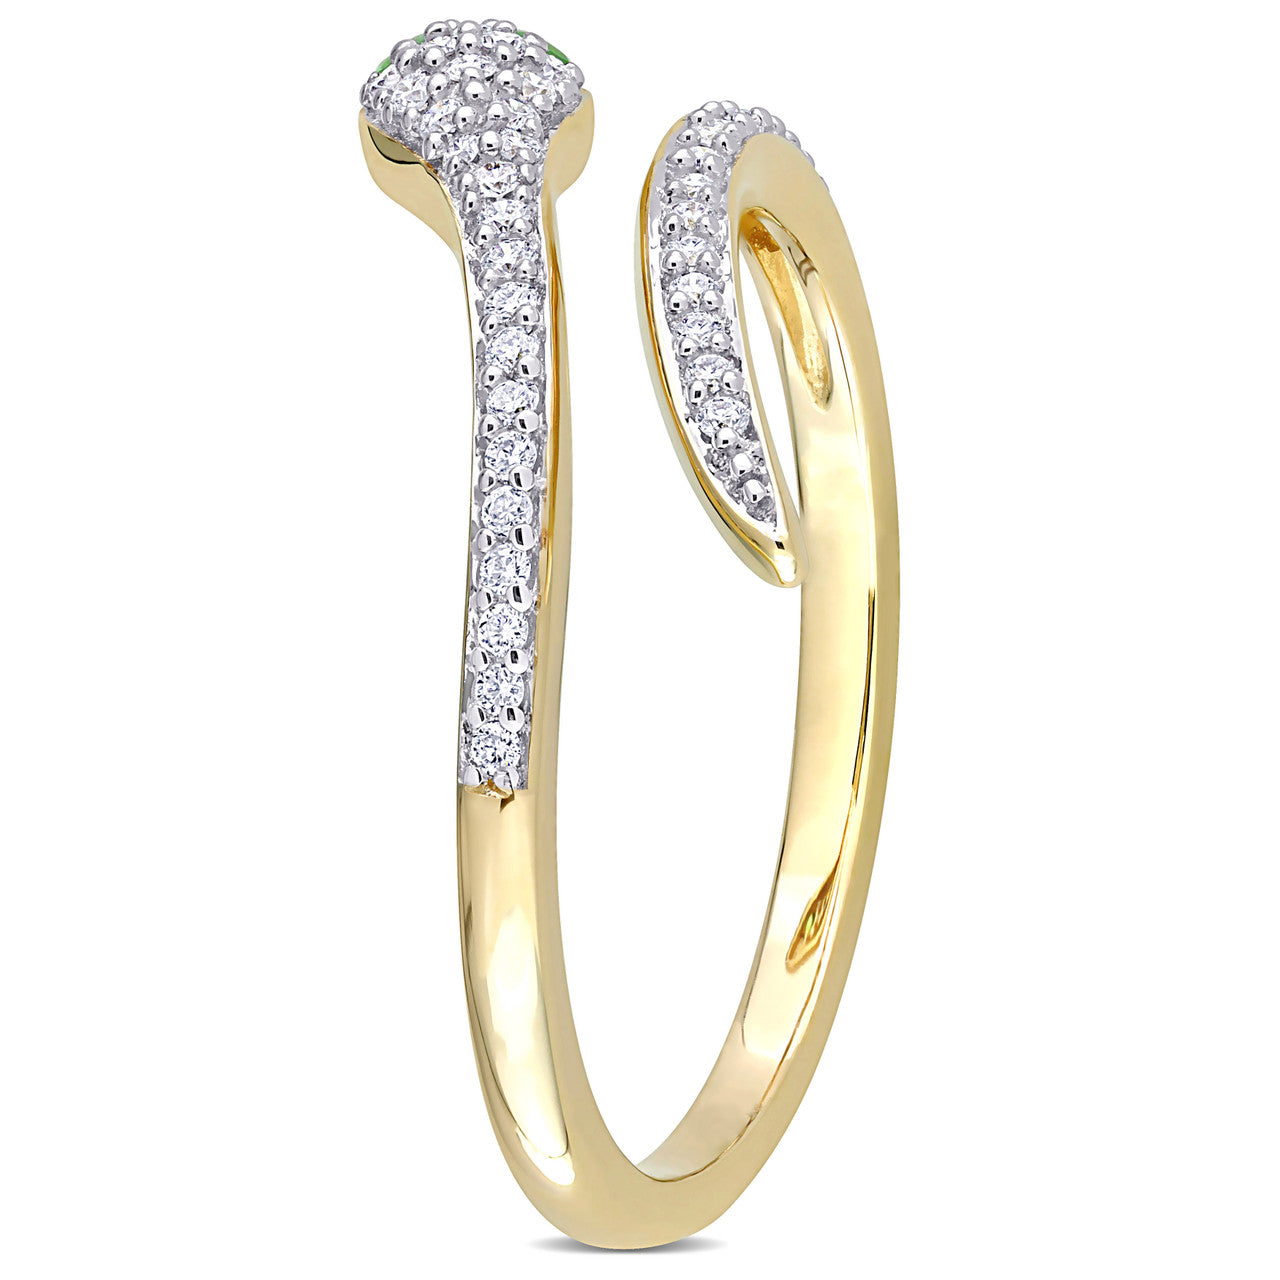 Ice Jewellery 1/5 CT TDW Diamond and 0.04 CT TGW Tsavorite Ring in 10k Yellow Gold - 75000005479 | Ice Jewellery Australia